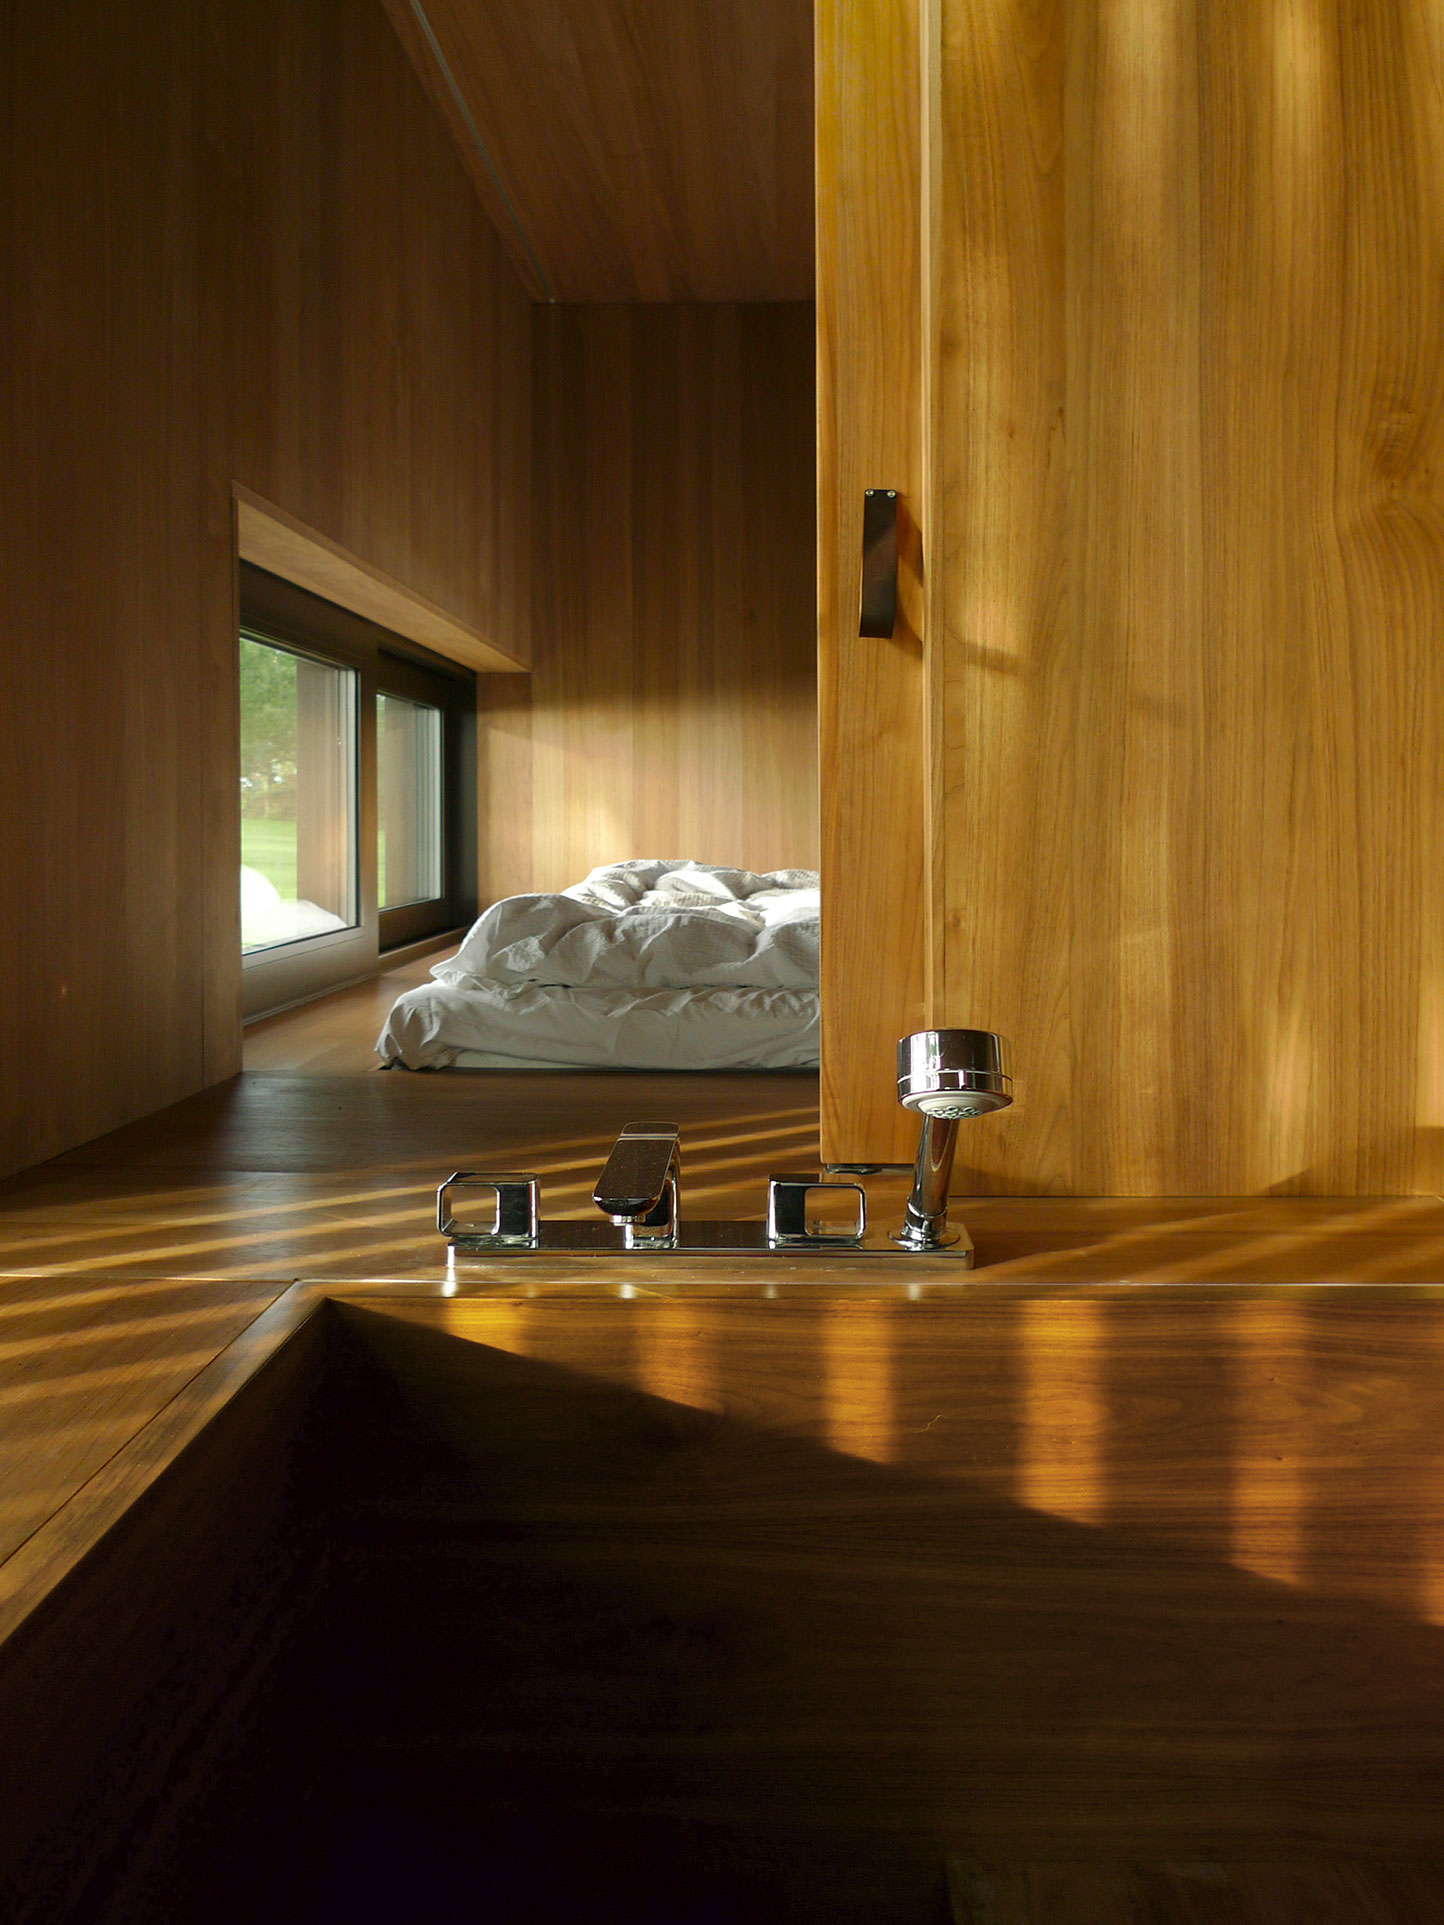 Image no. 5 of Custom Ofuro wooden bathtub - Diener und Diener